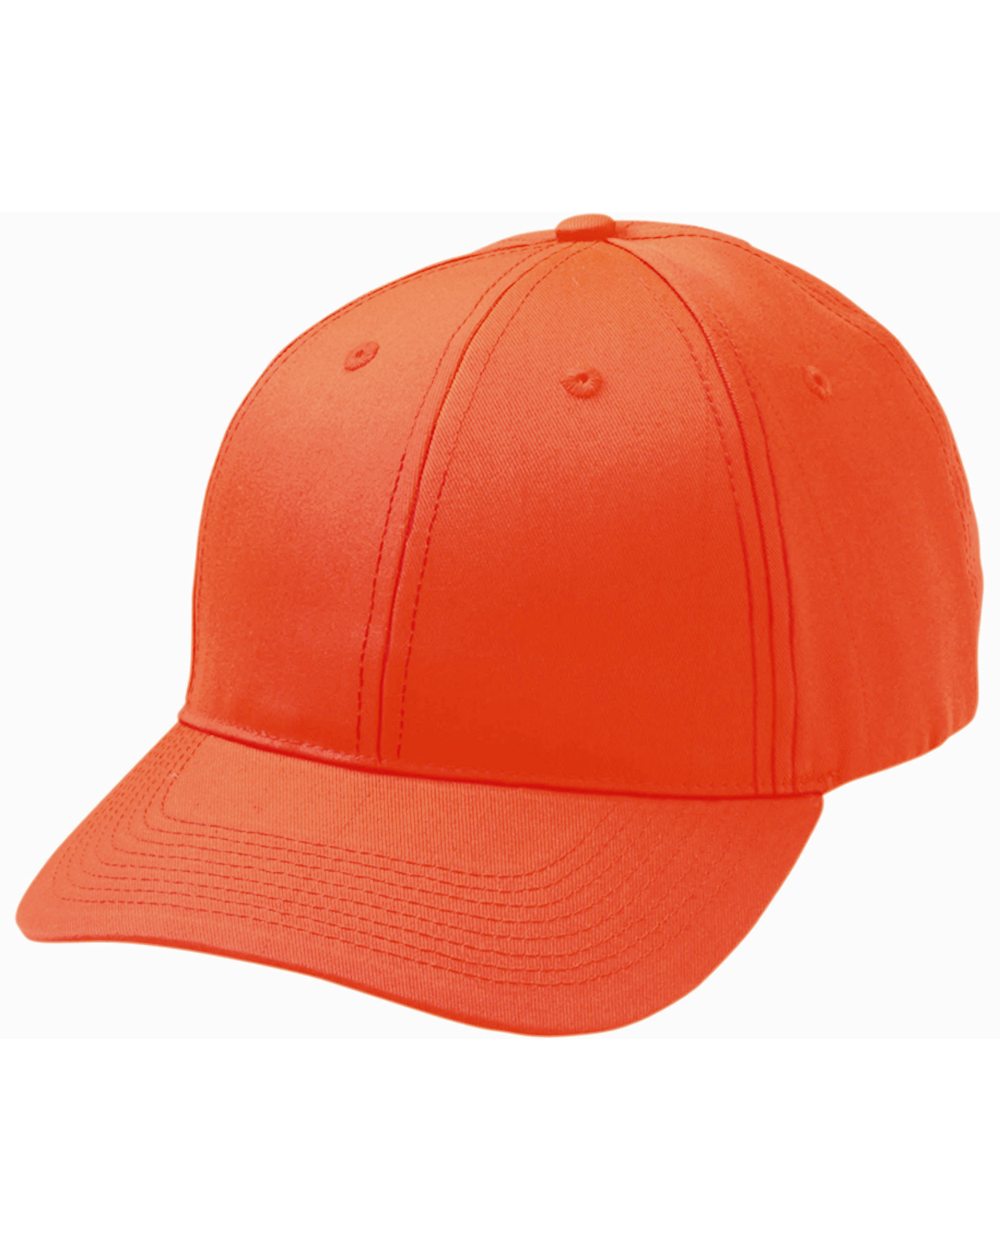 KATI SN100 Blaze Orange Cap